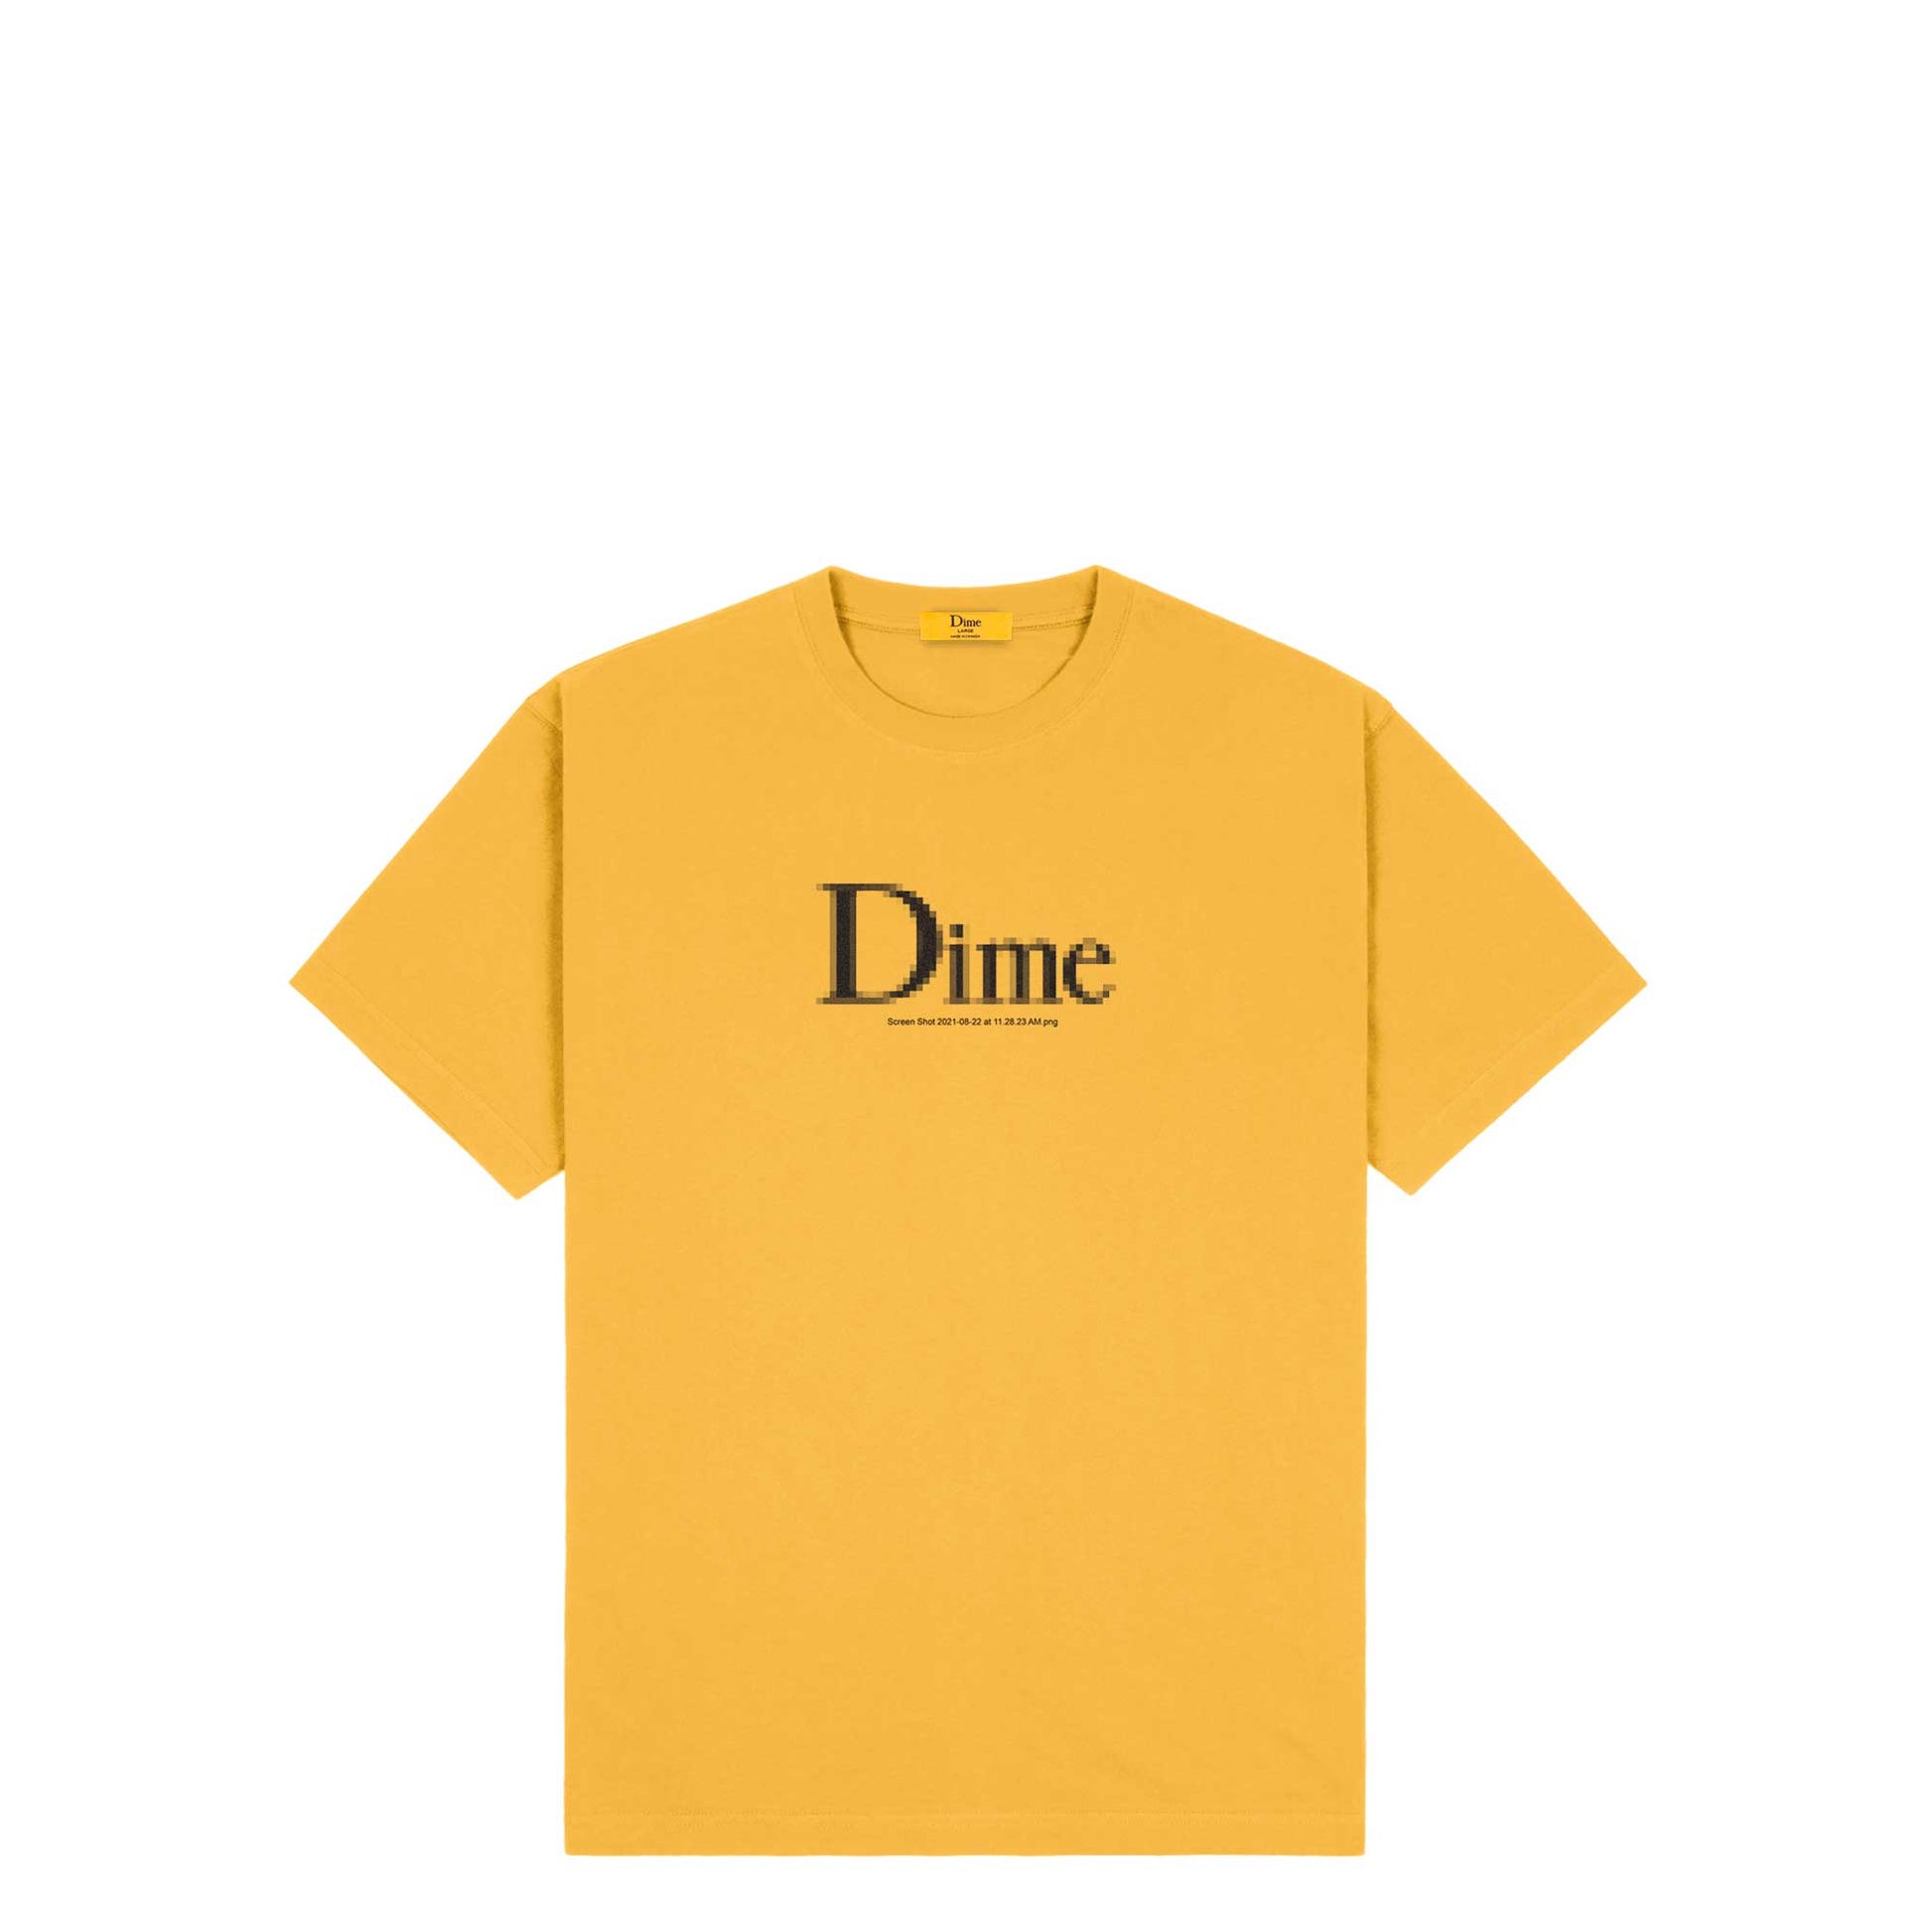 Dime Classic Screenshot T-shirt, dark yellow - Tiki Room Skateboards - 1